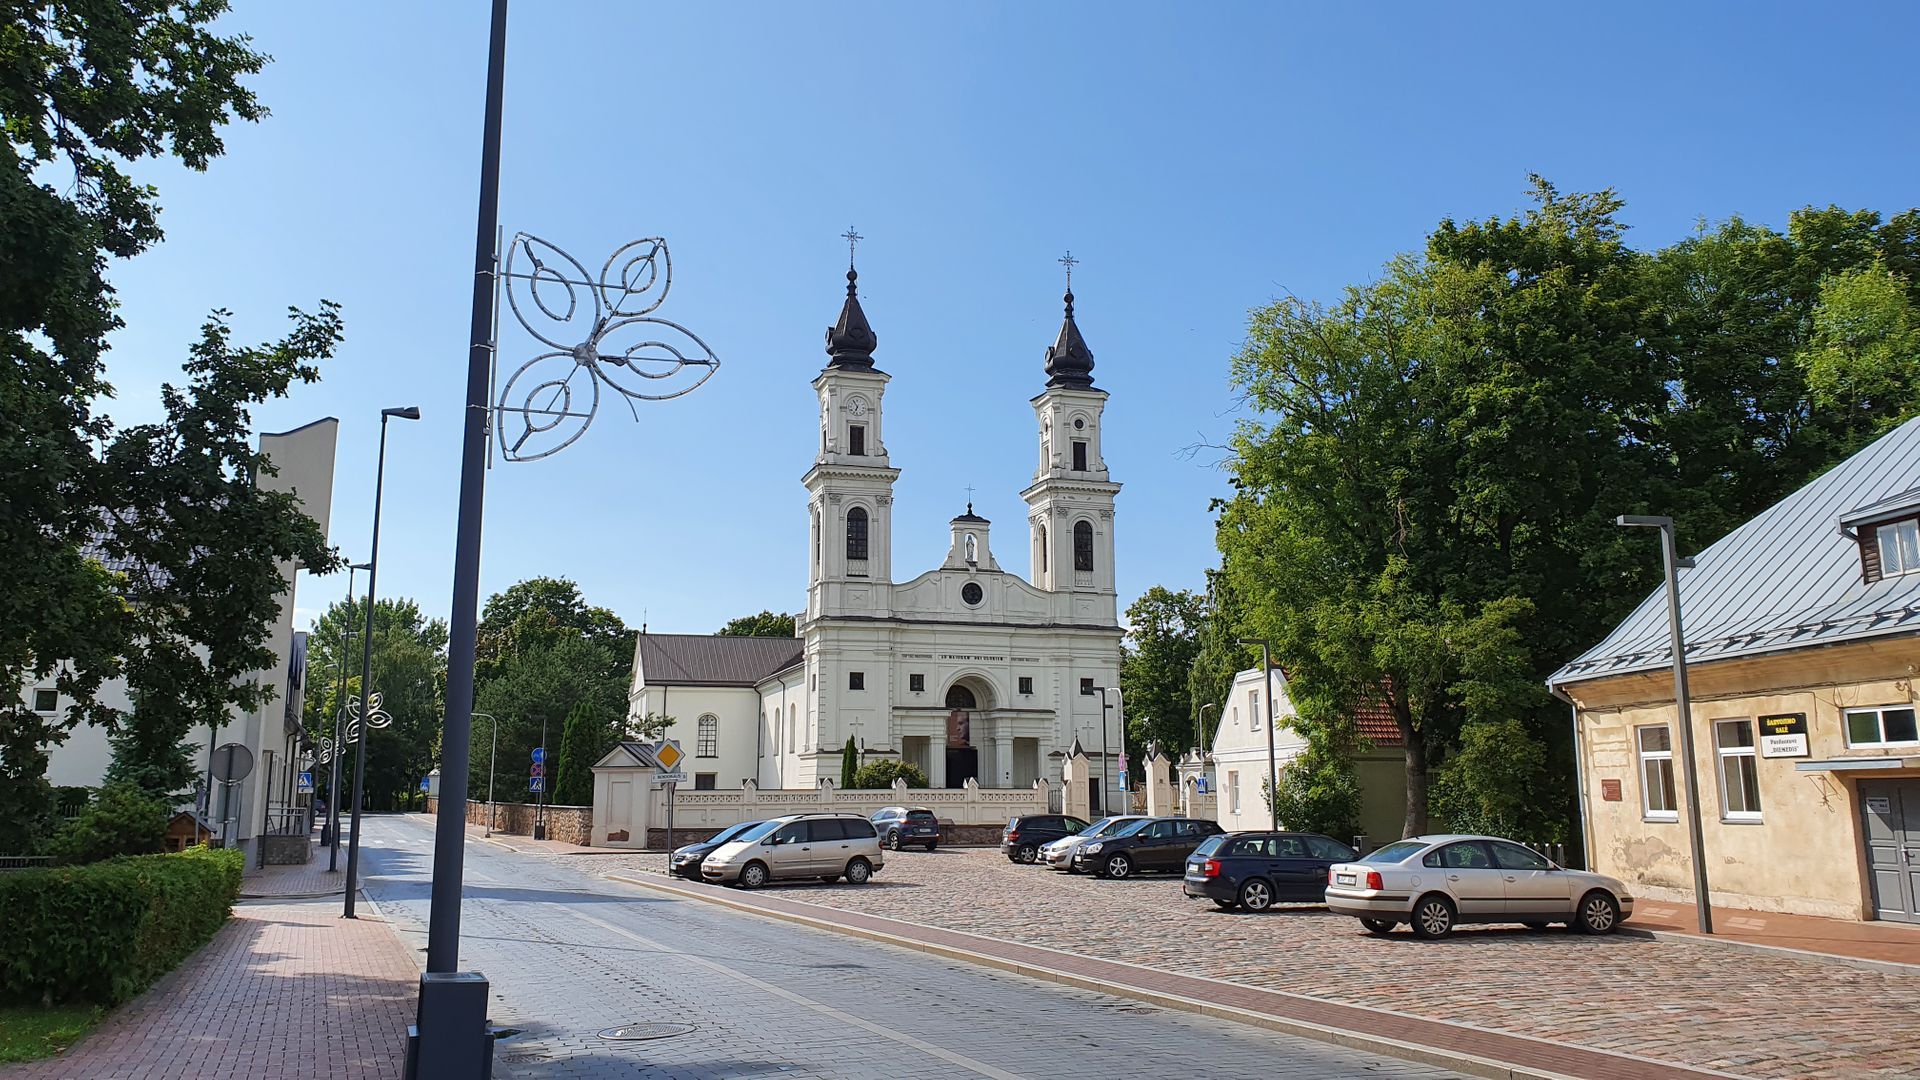 Marijampolė St. Michael the Archangel Church